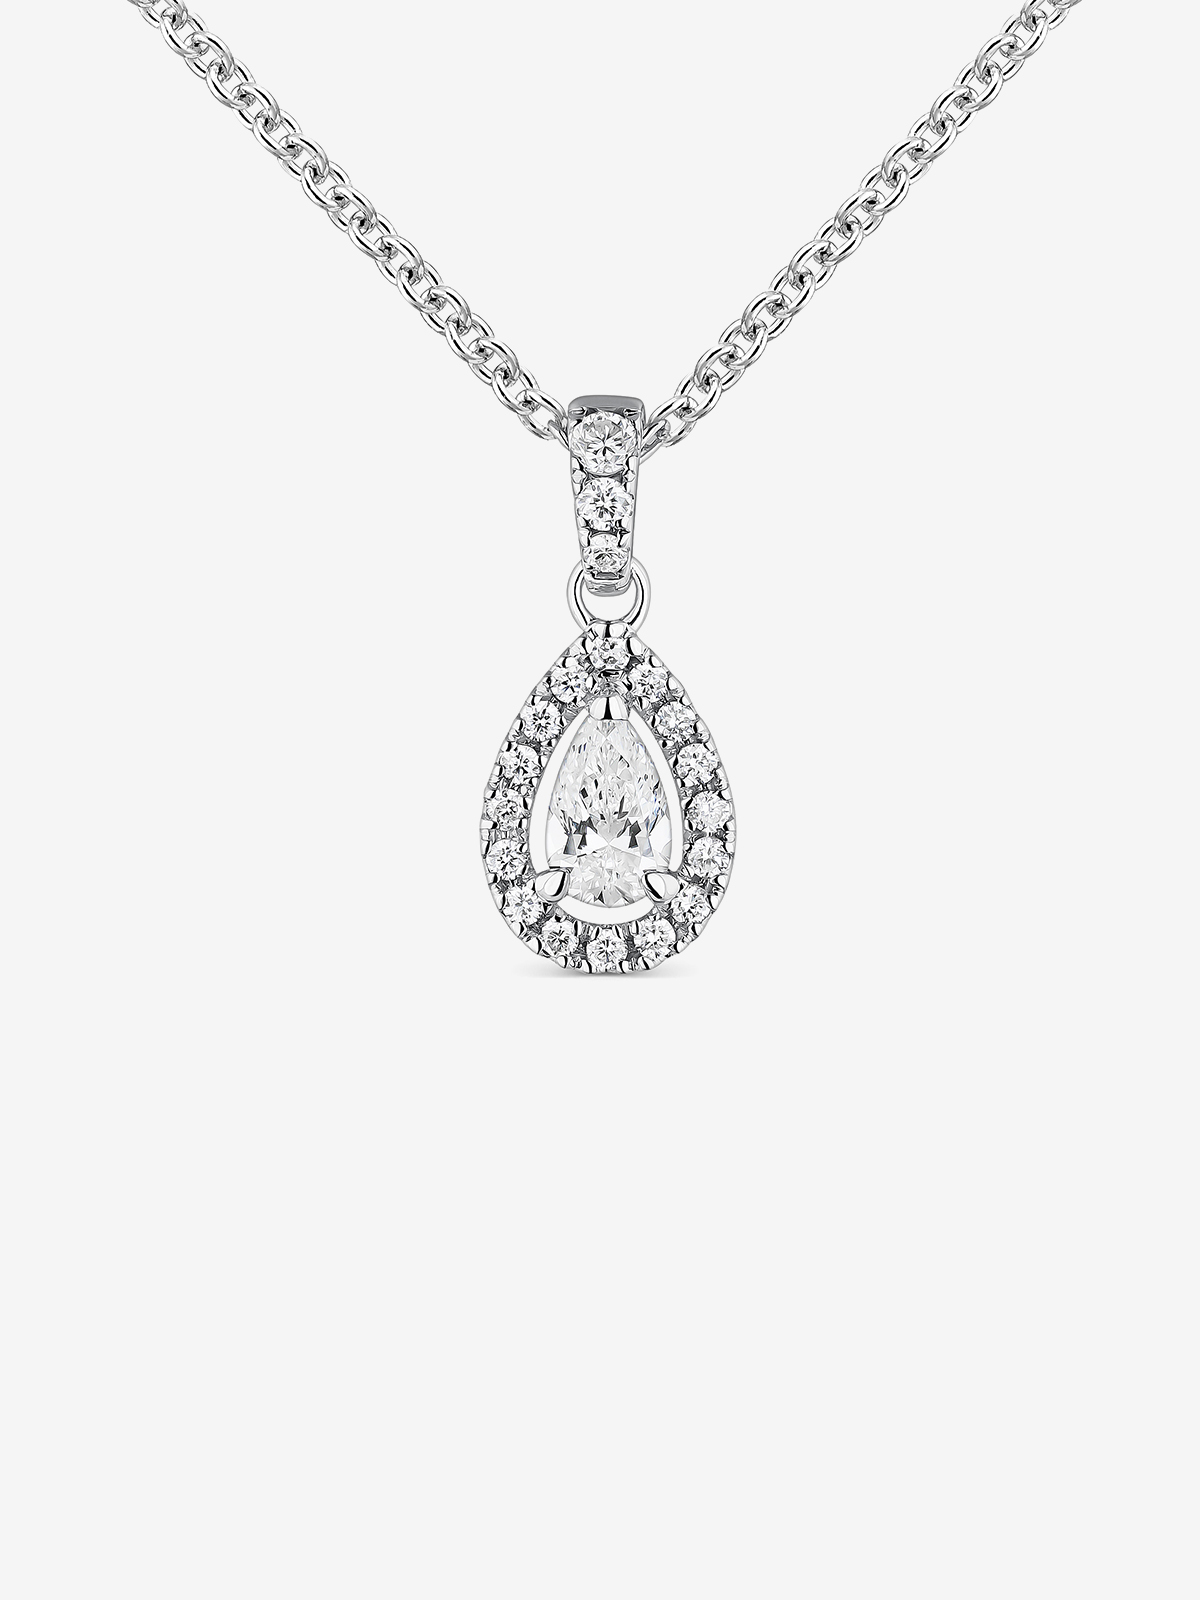 18kt white gold pendant with diamonds